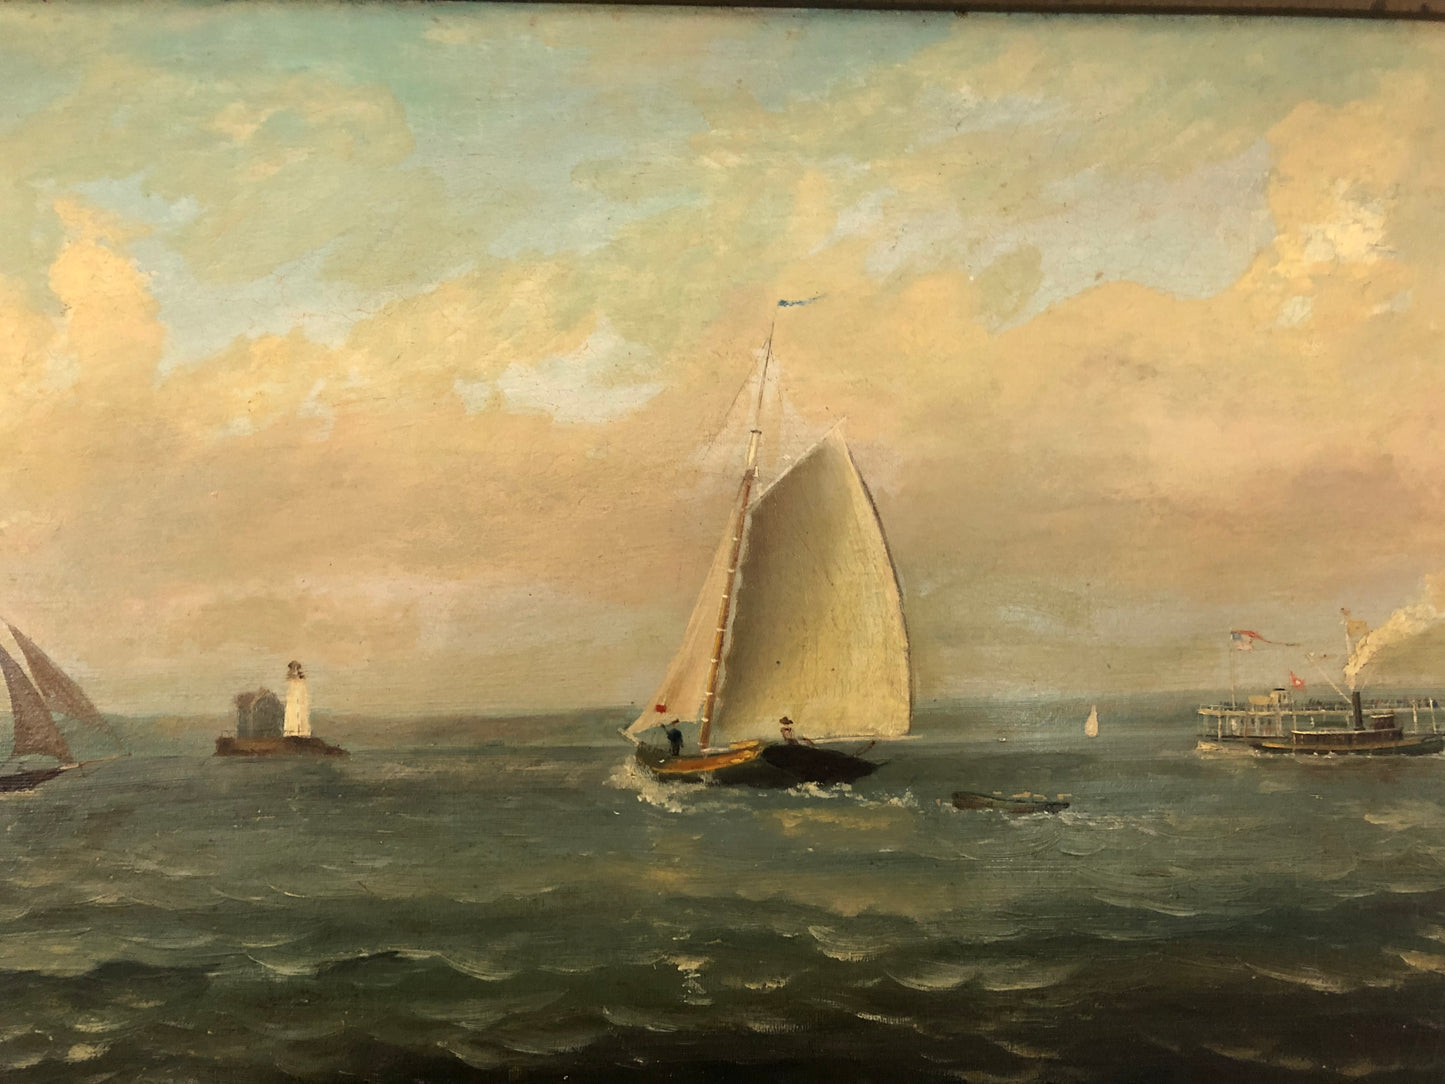 Antique Original Oil on Board Landscape Painting Signed F.W. Pulling 1889